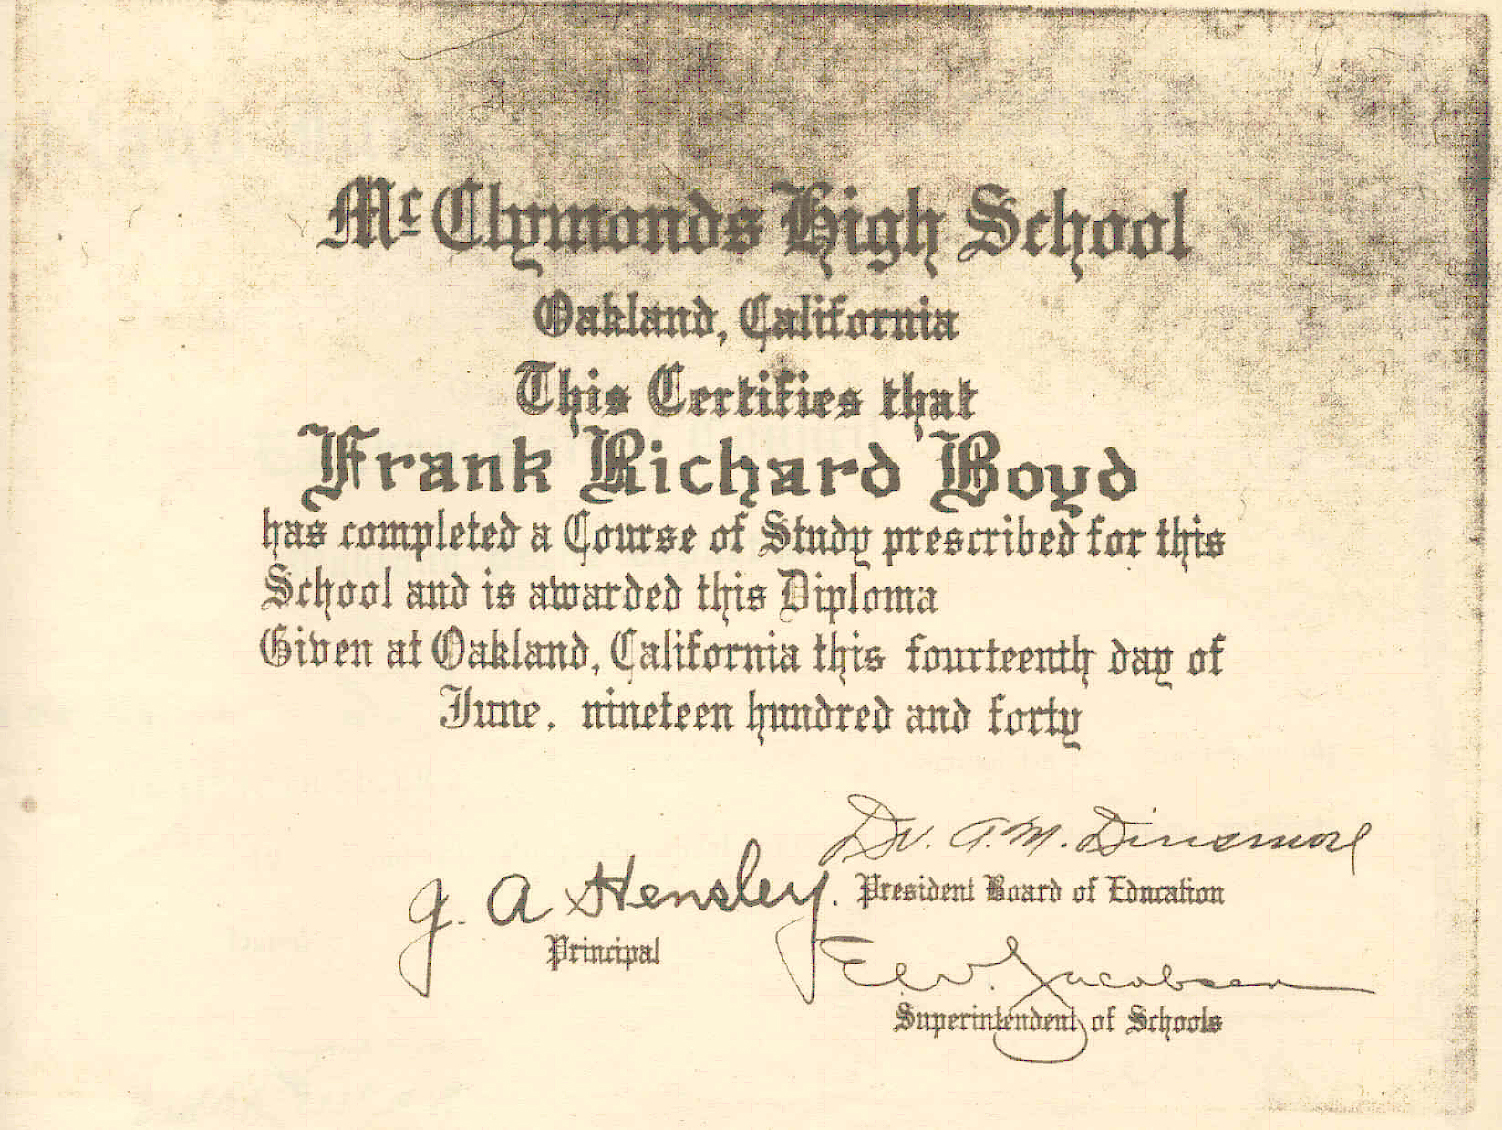 High school diploma of Frank Richard Boyd